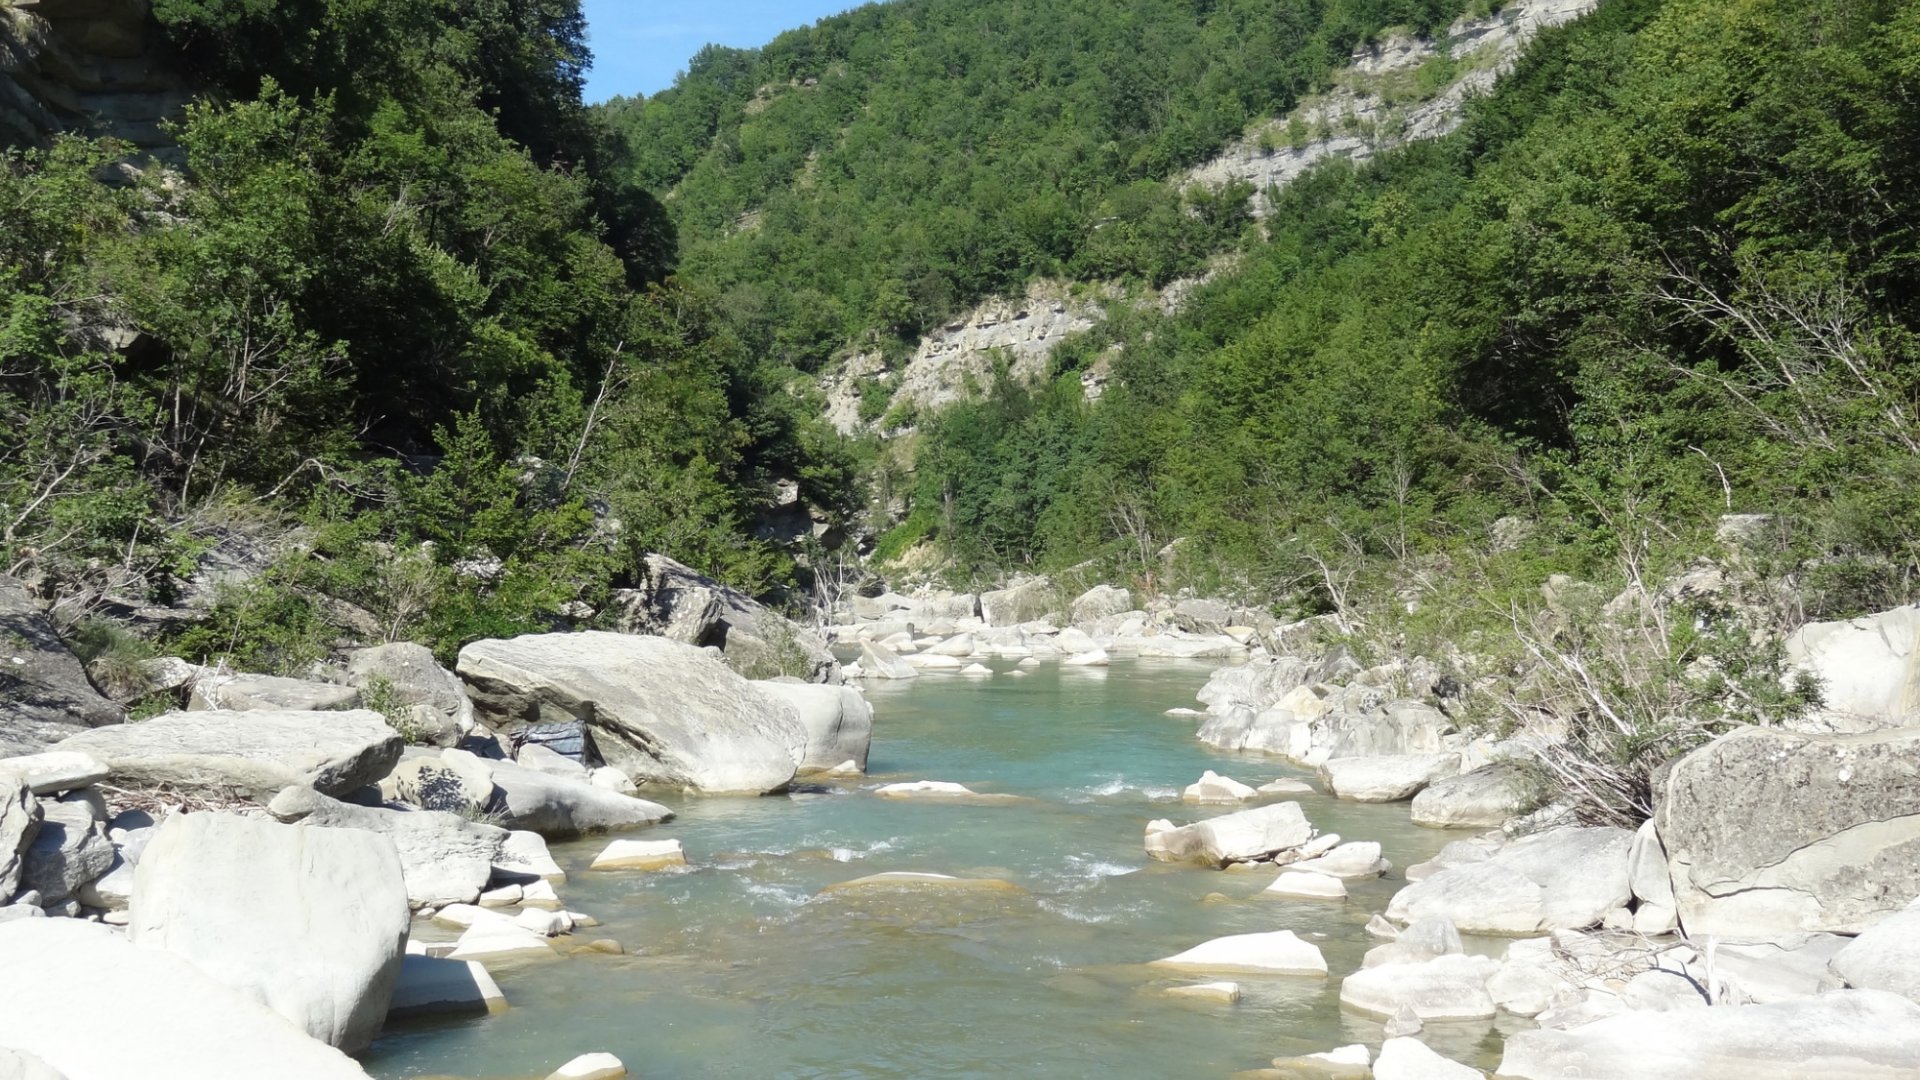 Fluss Santerno, Firenzuola